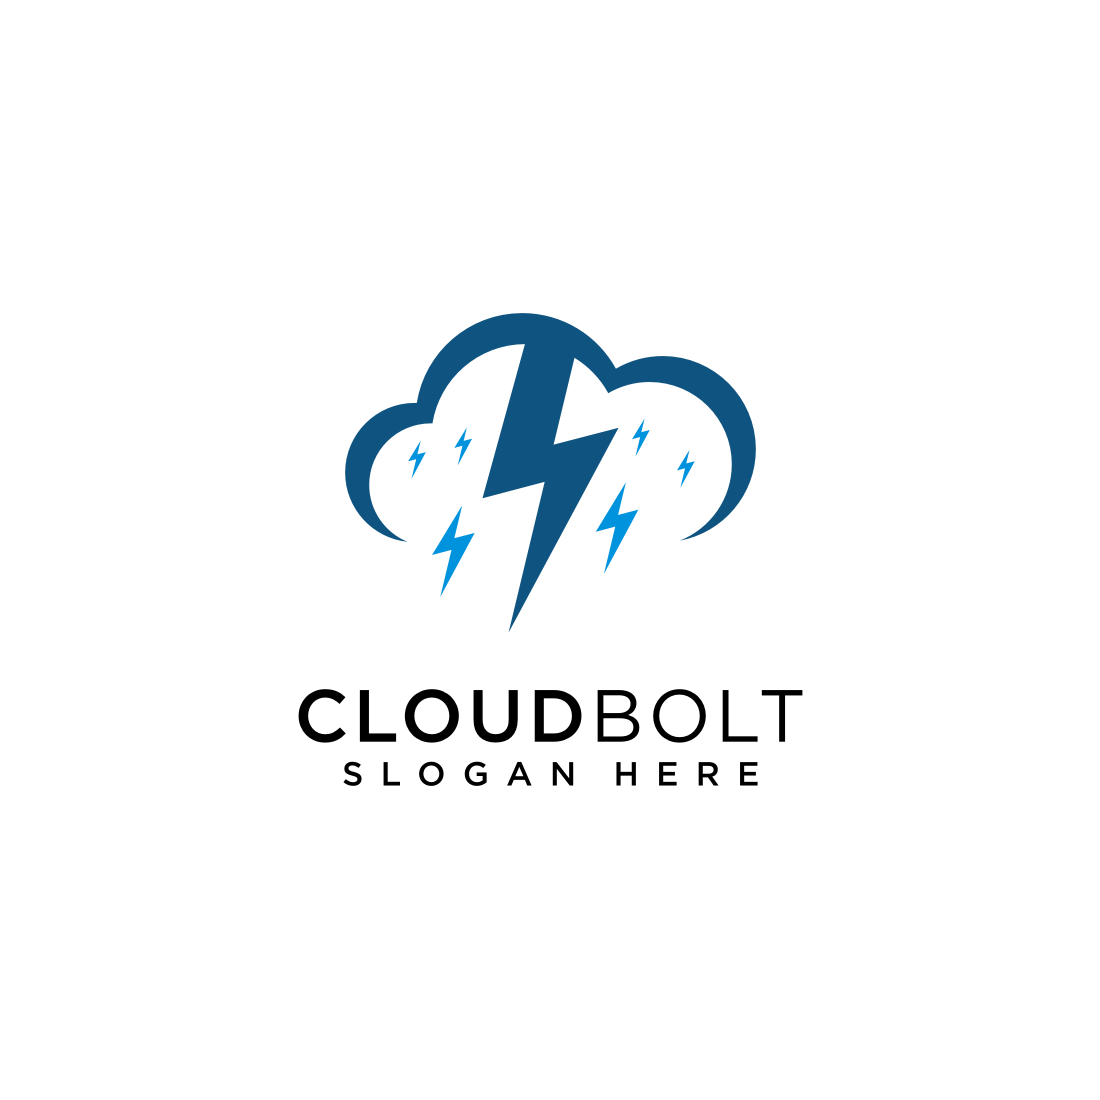 cloud bolt logo vector design cover image.